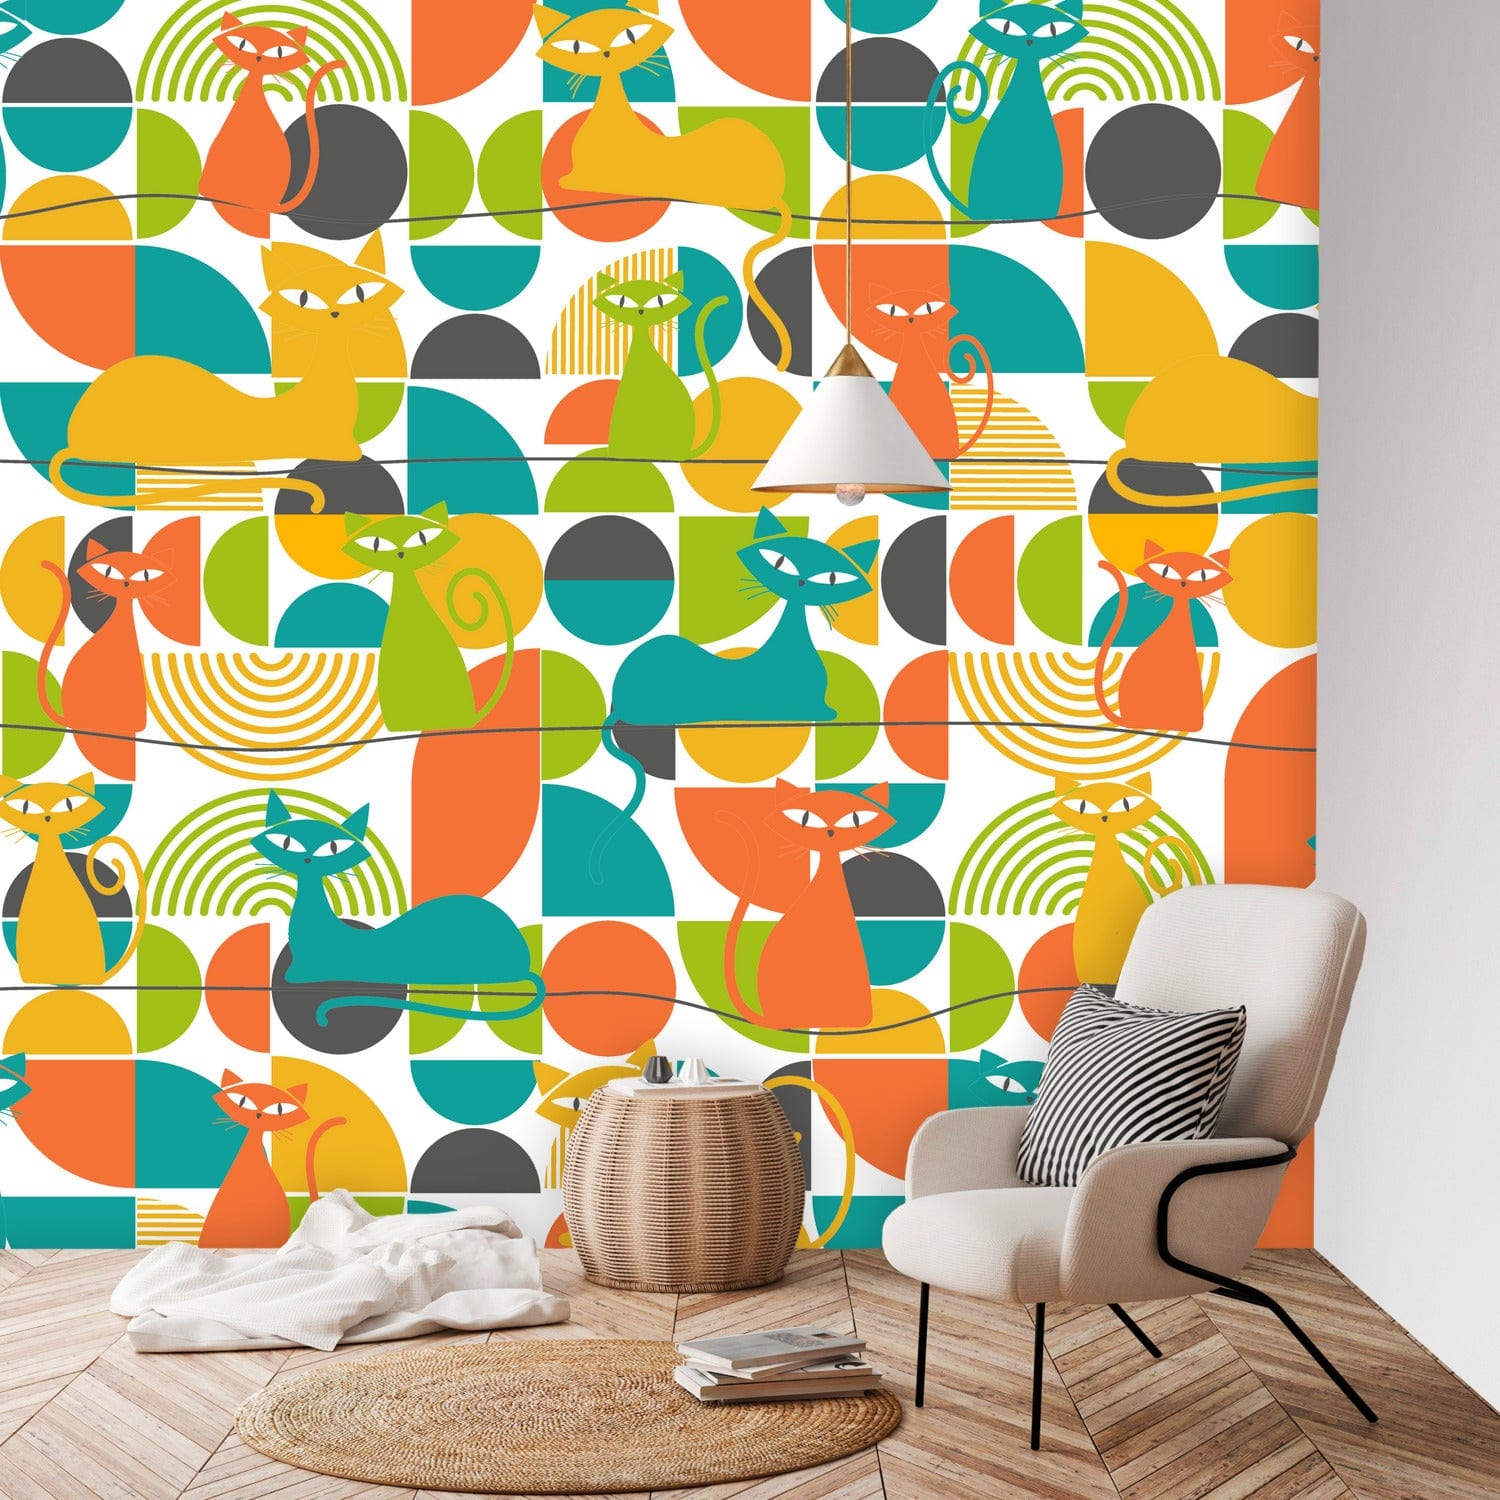 Mid Century Modern Wallpaper, Atomic Kitties, Geometric, Bold, Colorful, Orange, Teal, Yellow, Funky Fun, Kitsch Retro, Wall Murals Wallpaper